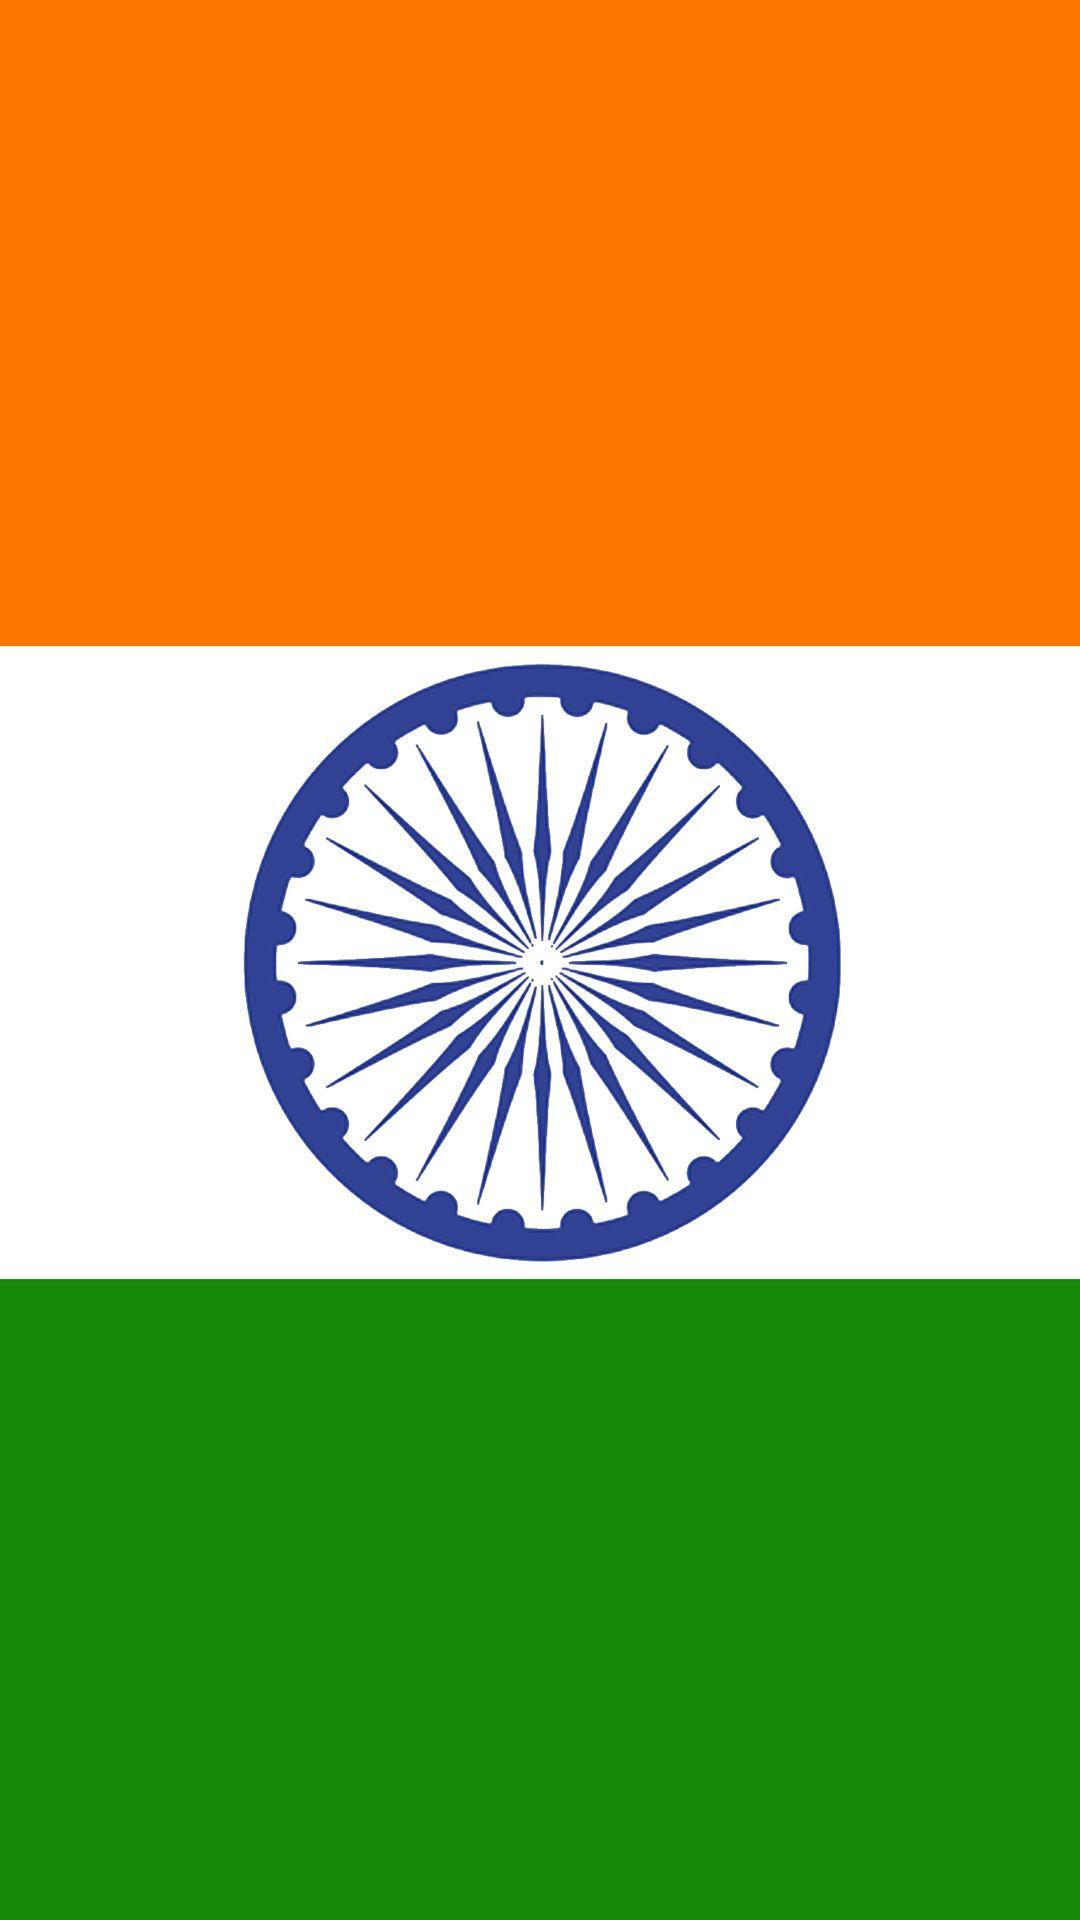 3D Tiranga Flag Image Free Download HD Wallpaper Wallpaper. Wallpaper Download. High Resolution Wallpaper. Indian flag wallpaper, India flag, Indian flag image